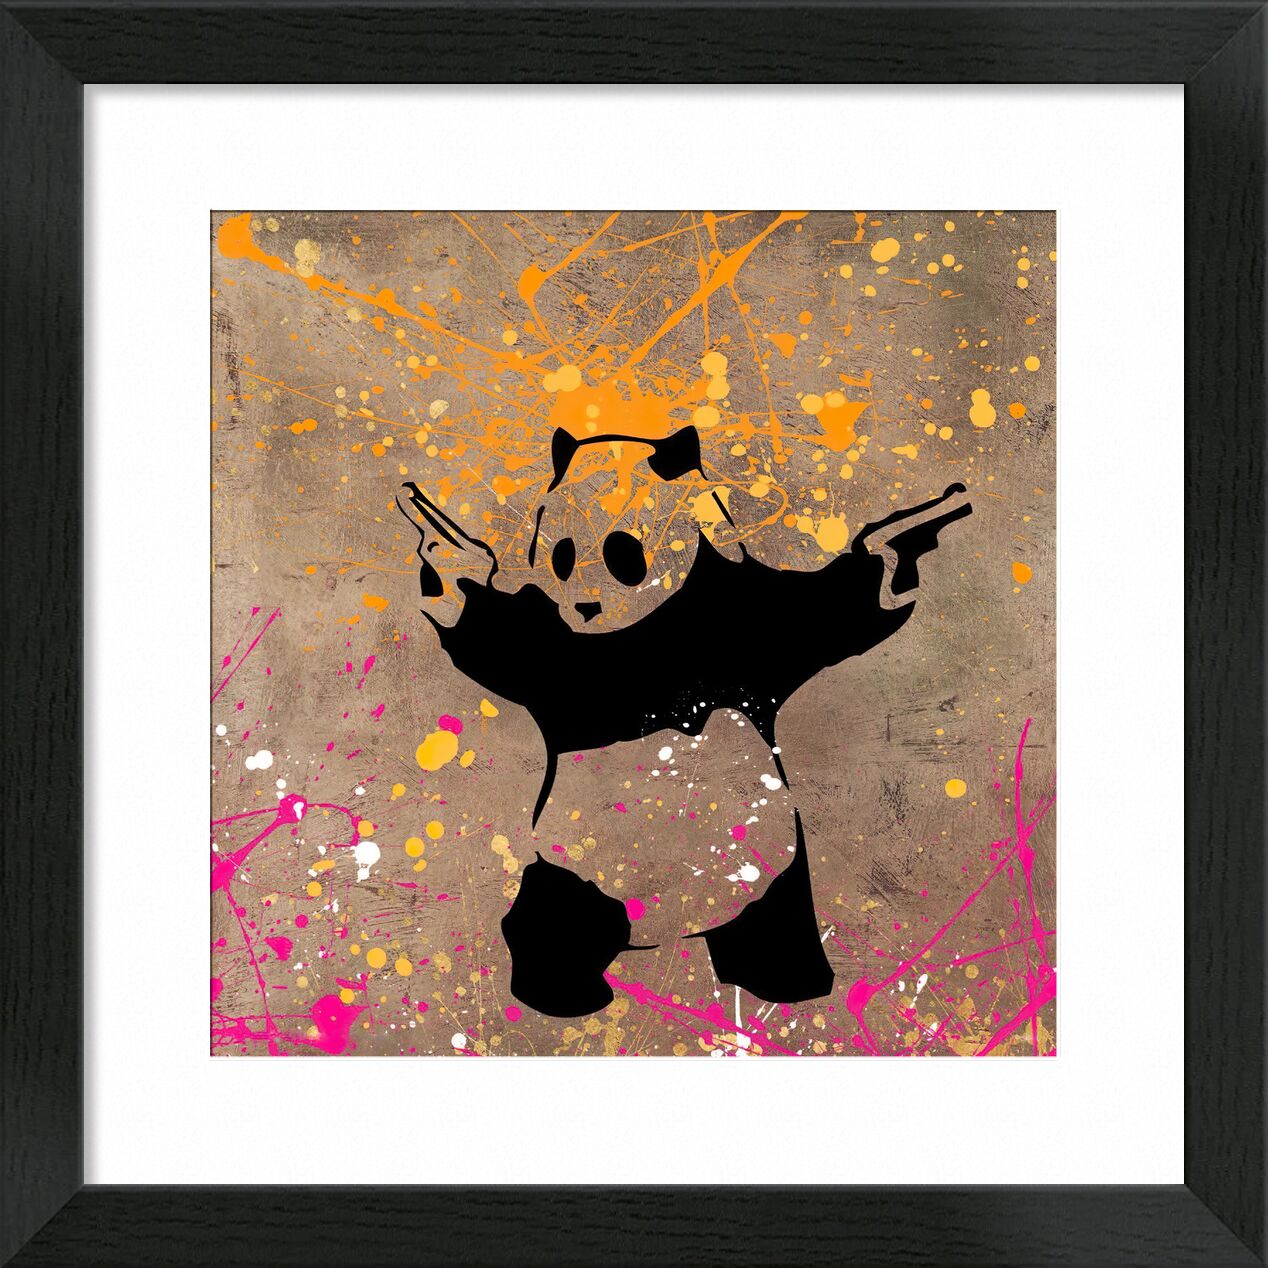 Panda with Guns - BANKSY von Bildende Kunst, Prodi Art, Panda, Waffen, Straßenkunst, banksy, Graffiti